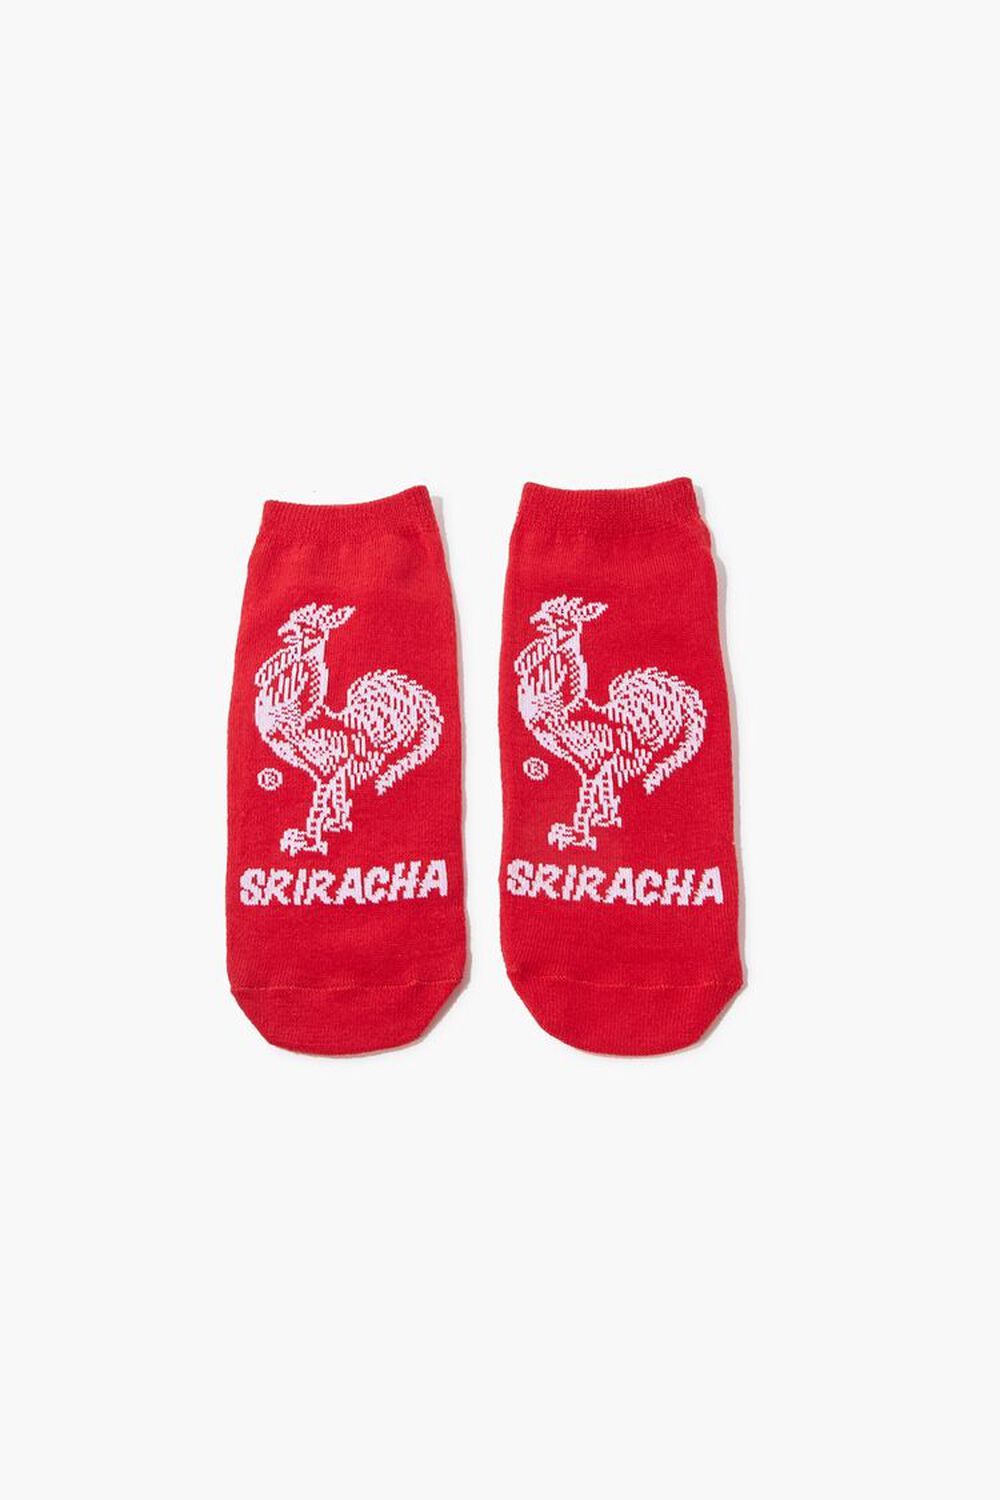 Sriracha Ankle Socks, image 2